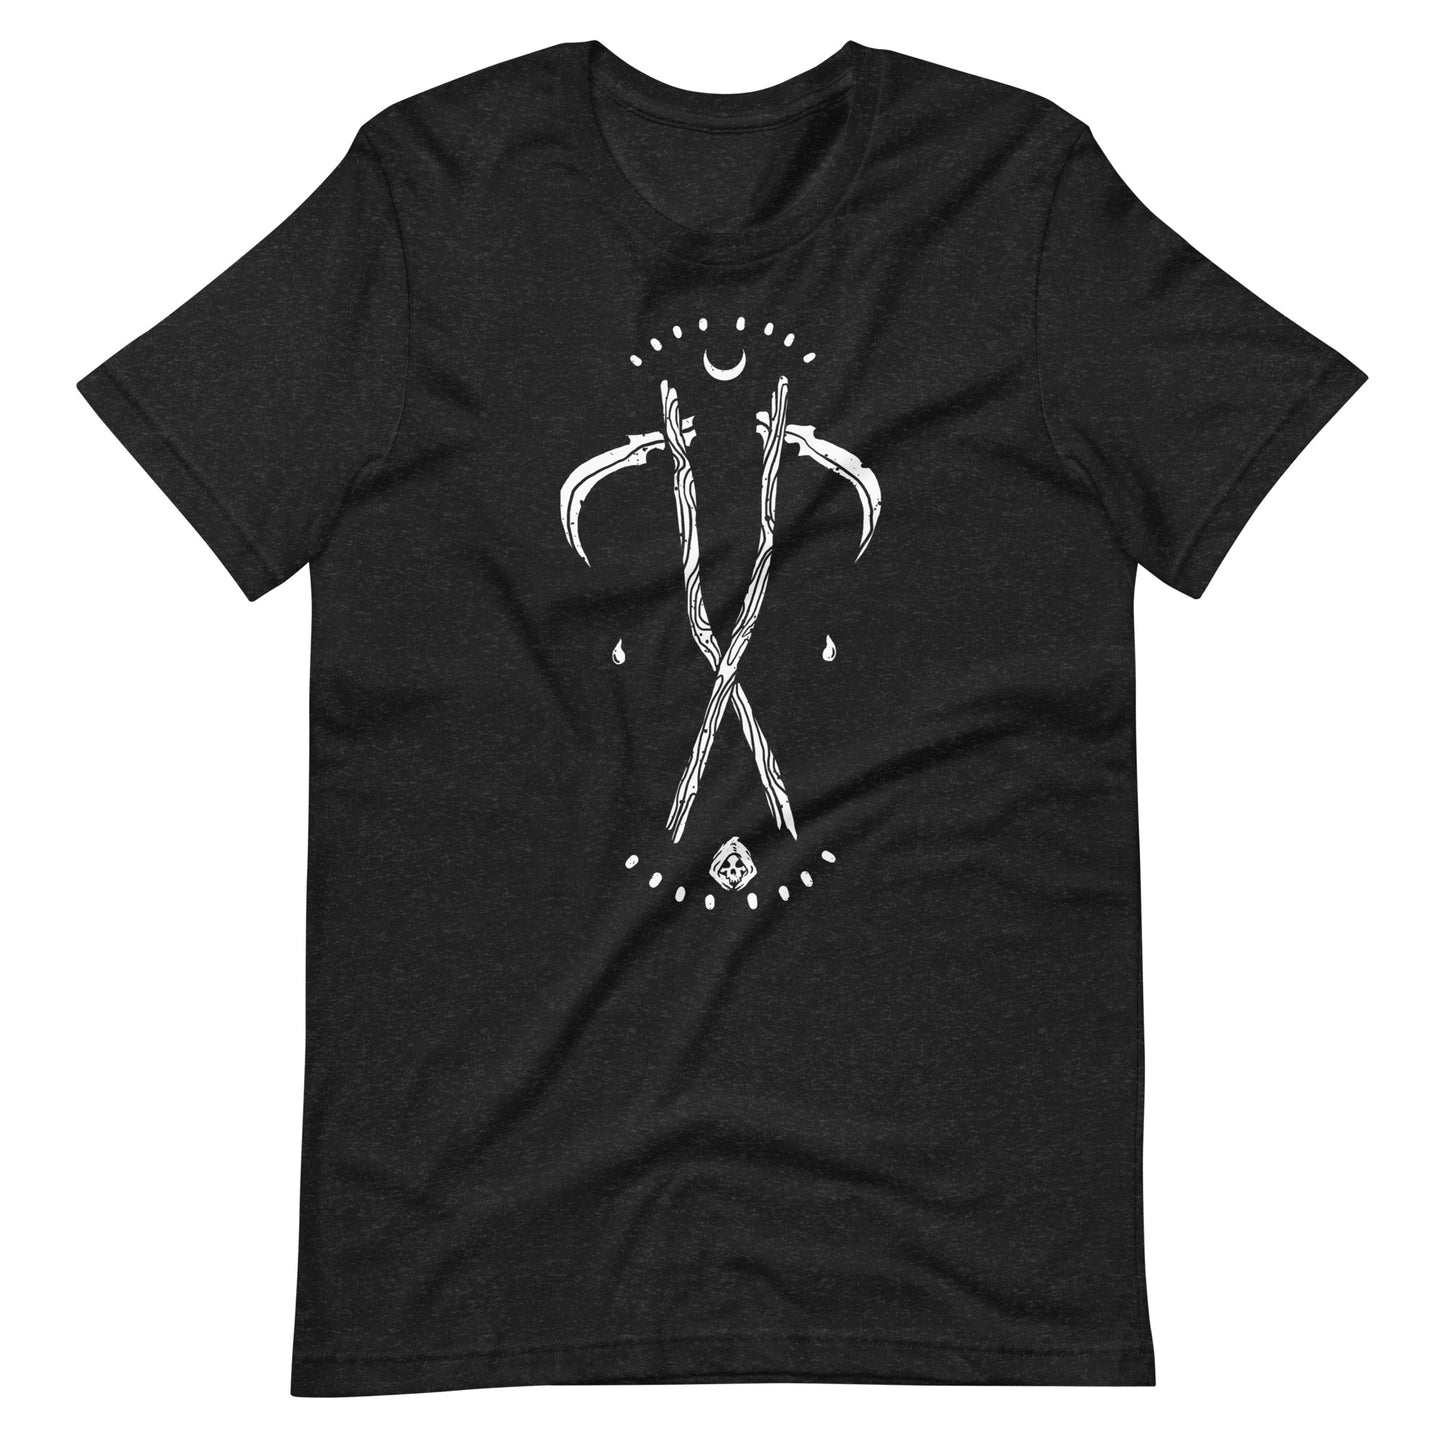 Grim - Men's t-shirt - Black Heather Front